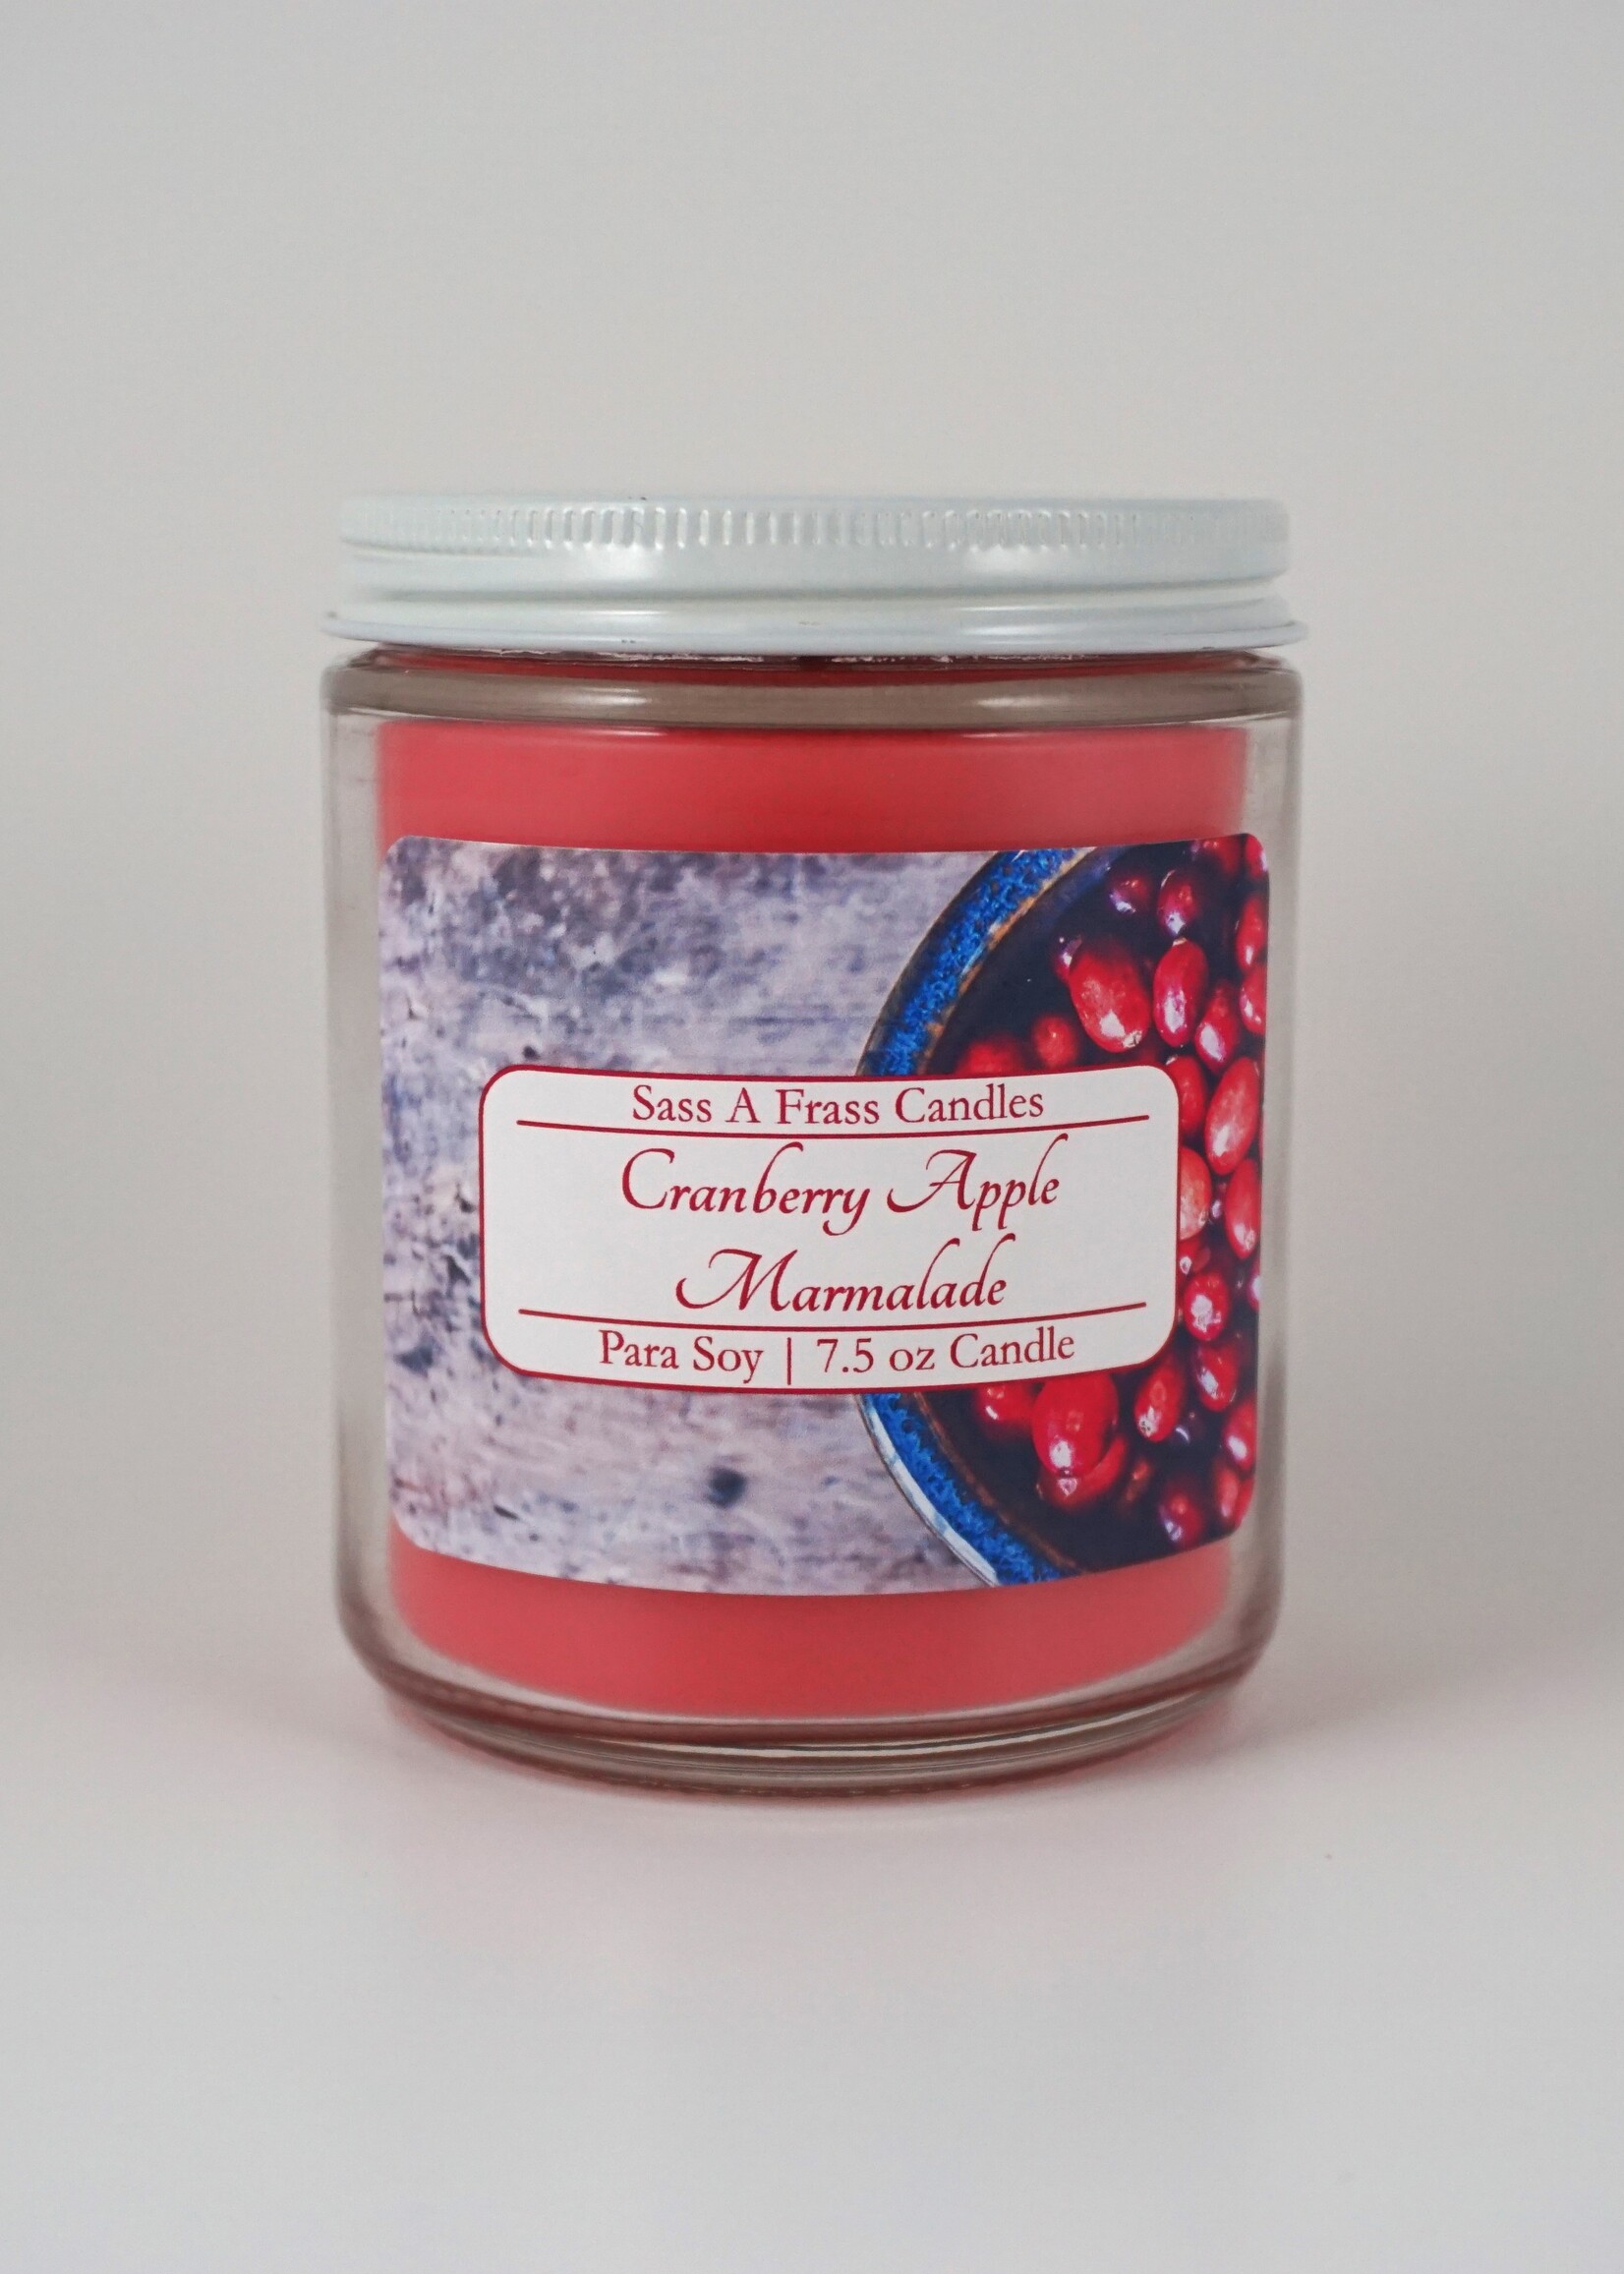 Cranberry Apple Marmalade 7.5 oz Candle